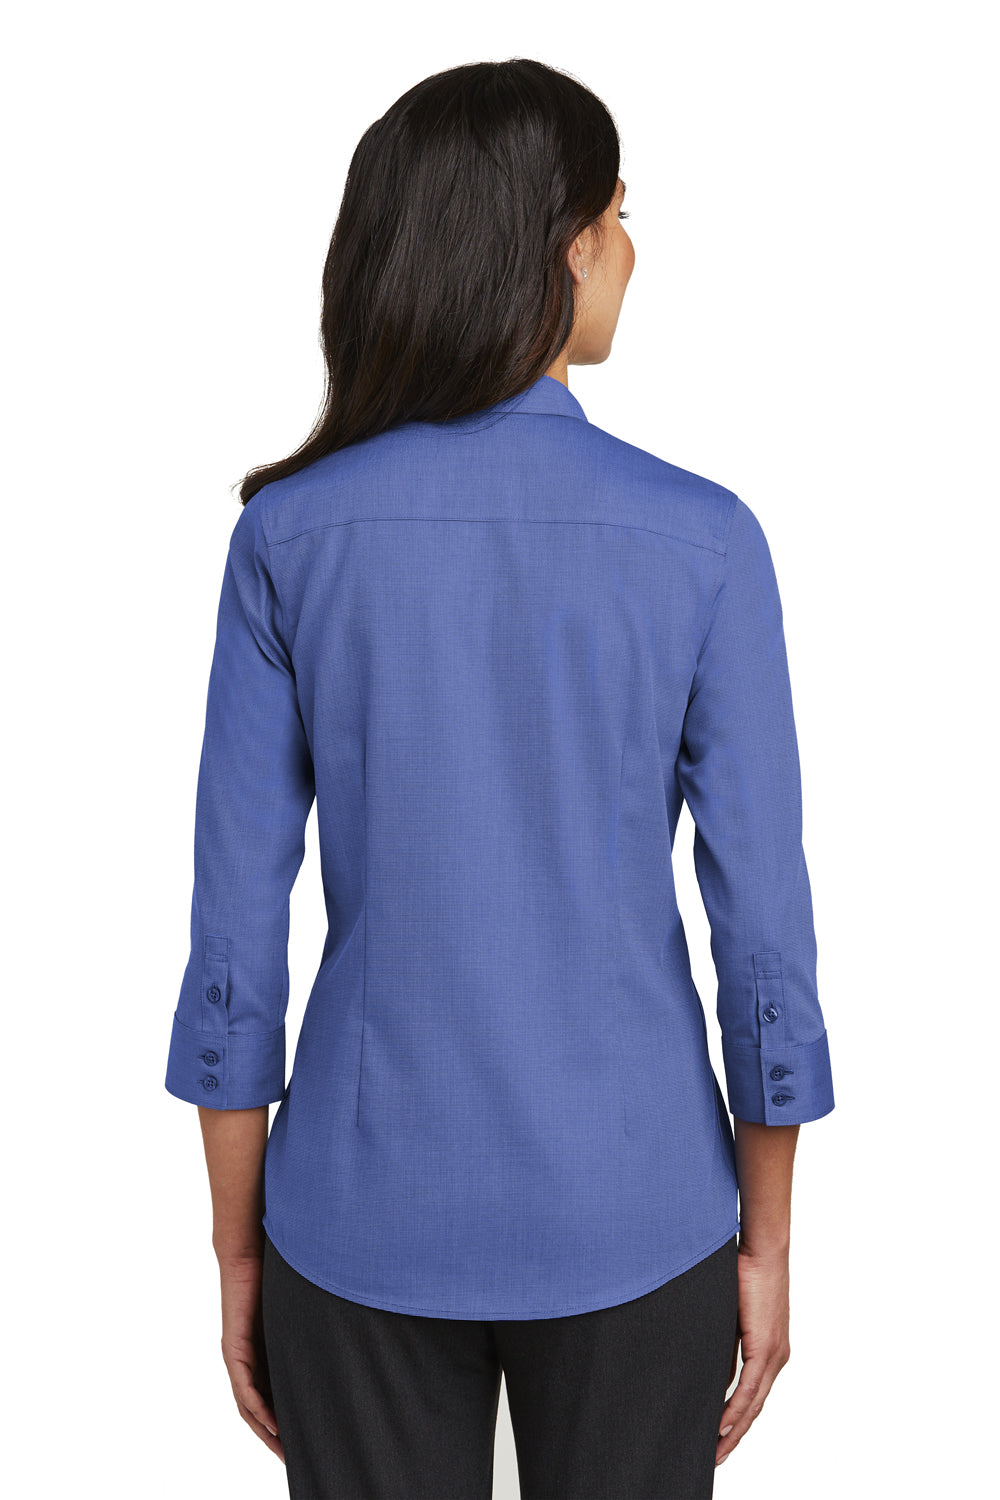 Red House RH690 Womens Nailhead Wrinkle Resistant 3/4 Sleeve Button Down Shirt Mediterranean Blue Back